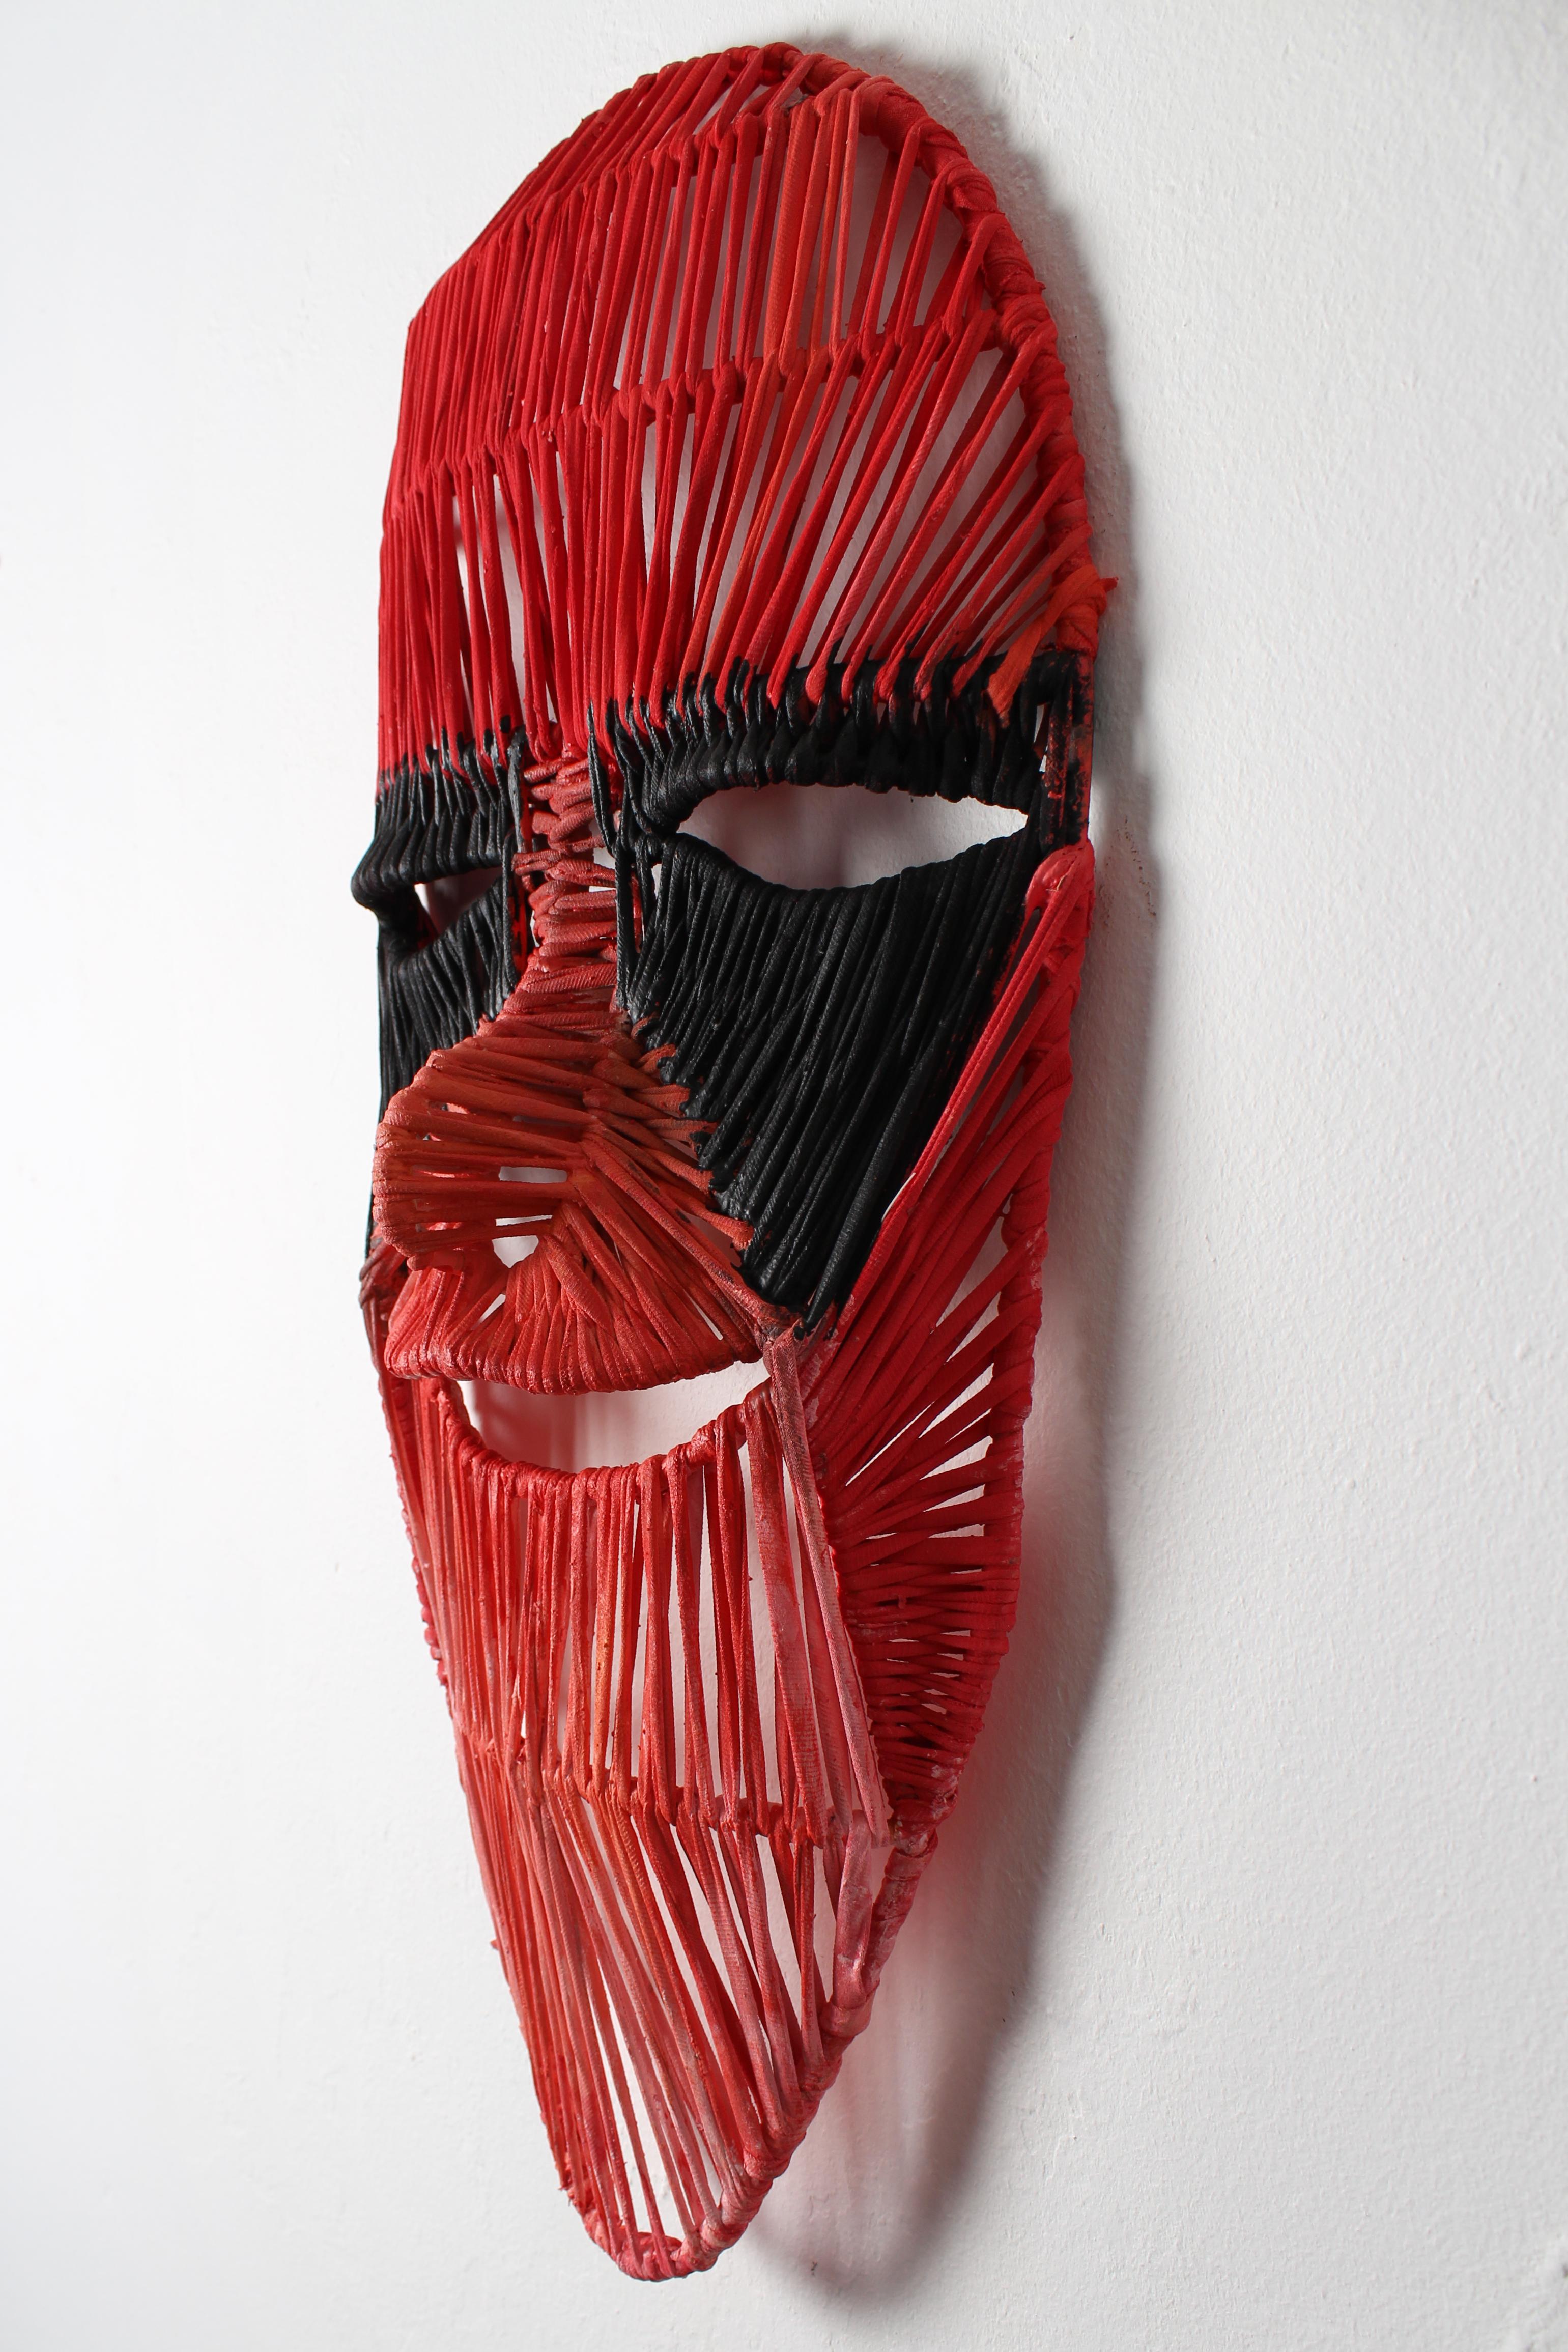 Deep Smile 1, Elisia Nghidishange, Mixed media sculpture For Sale 7